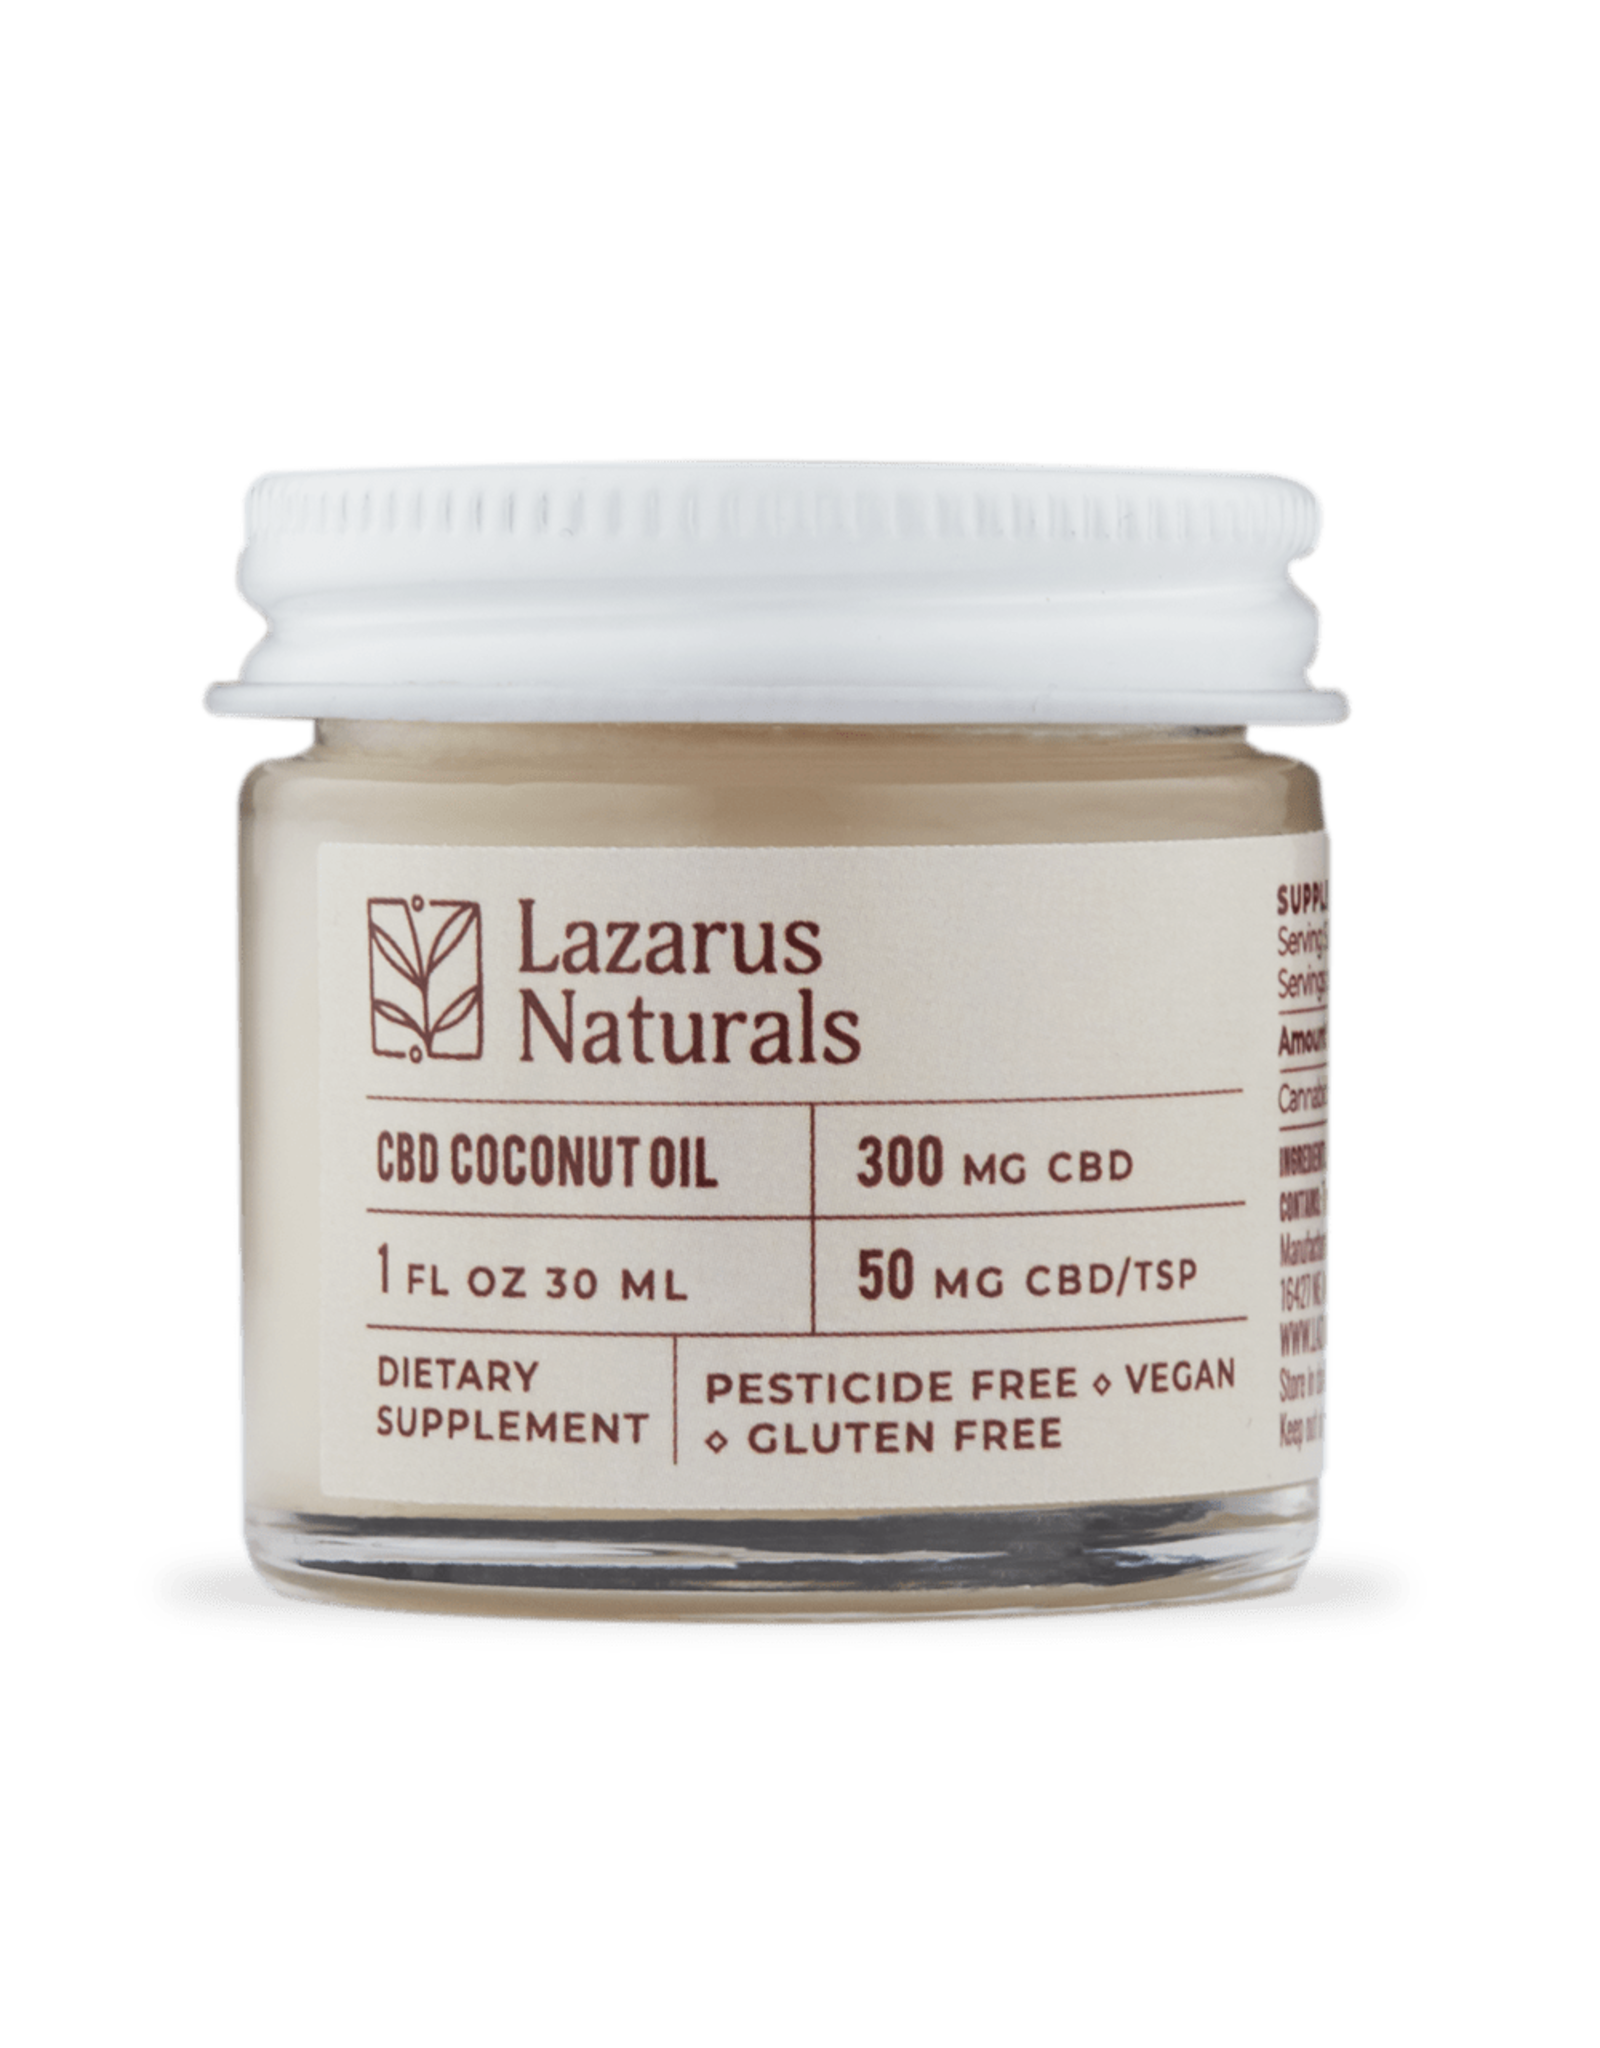 Lazarus Naturals Lazarus Naturals 300mg CBD Coconut Oil 1 fl oz 30 ml